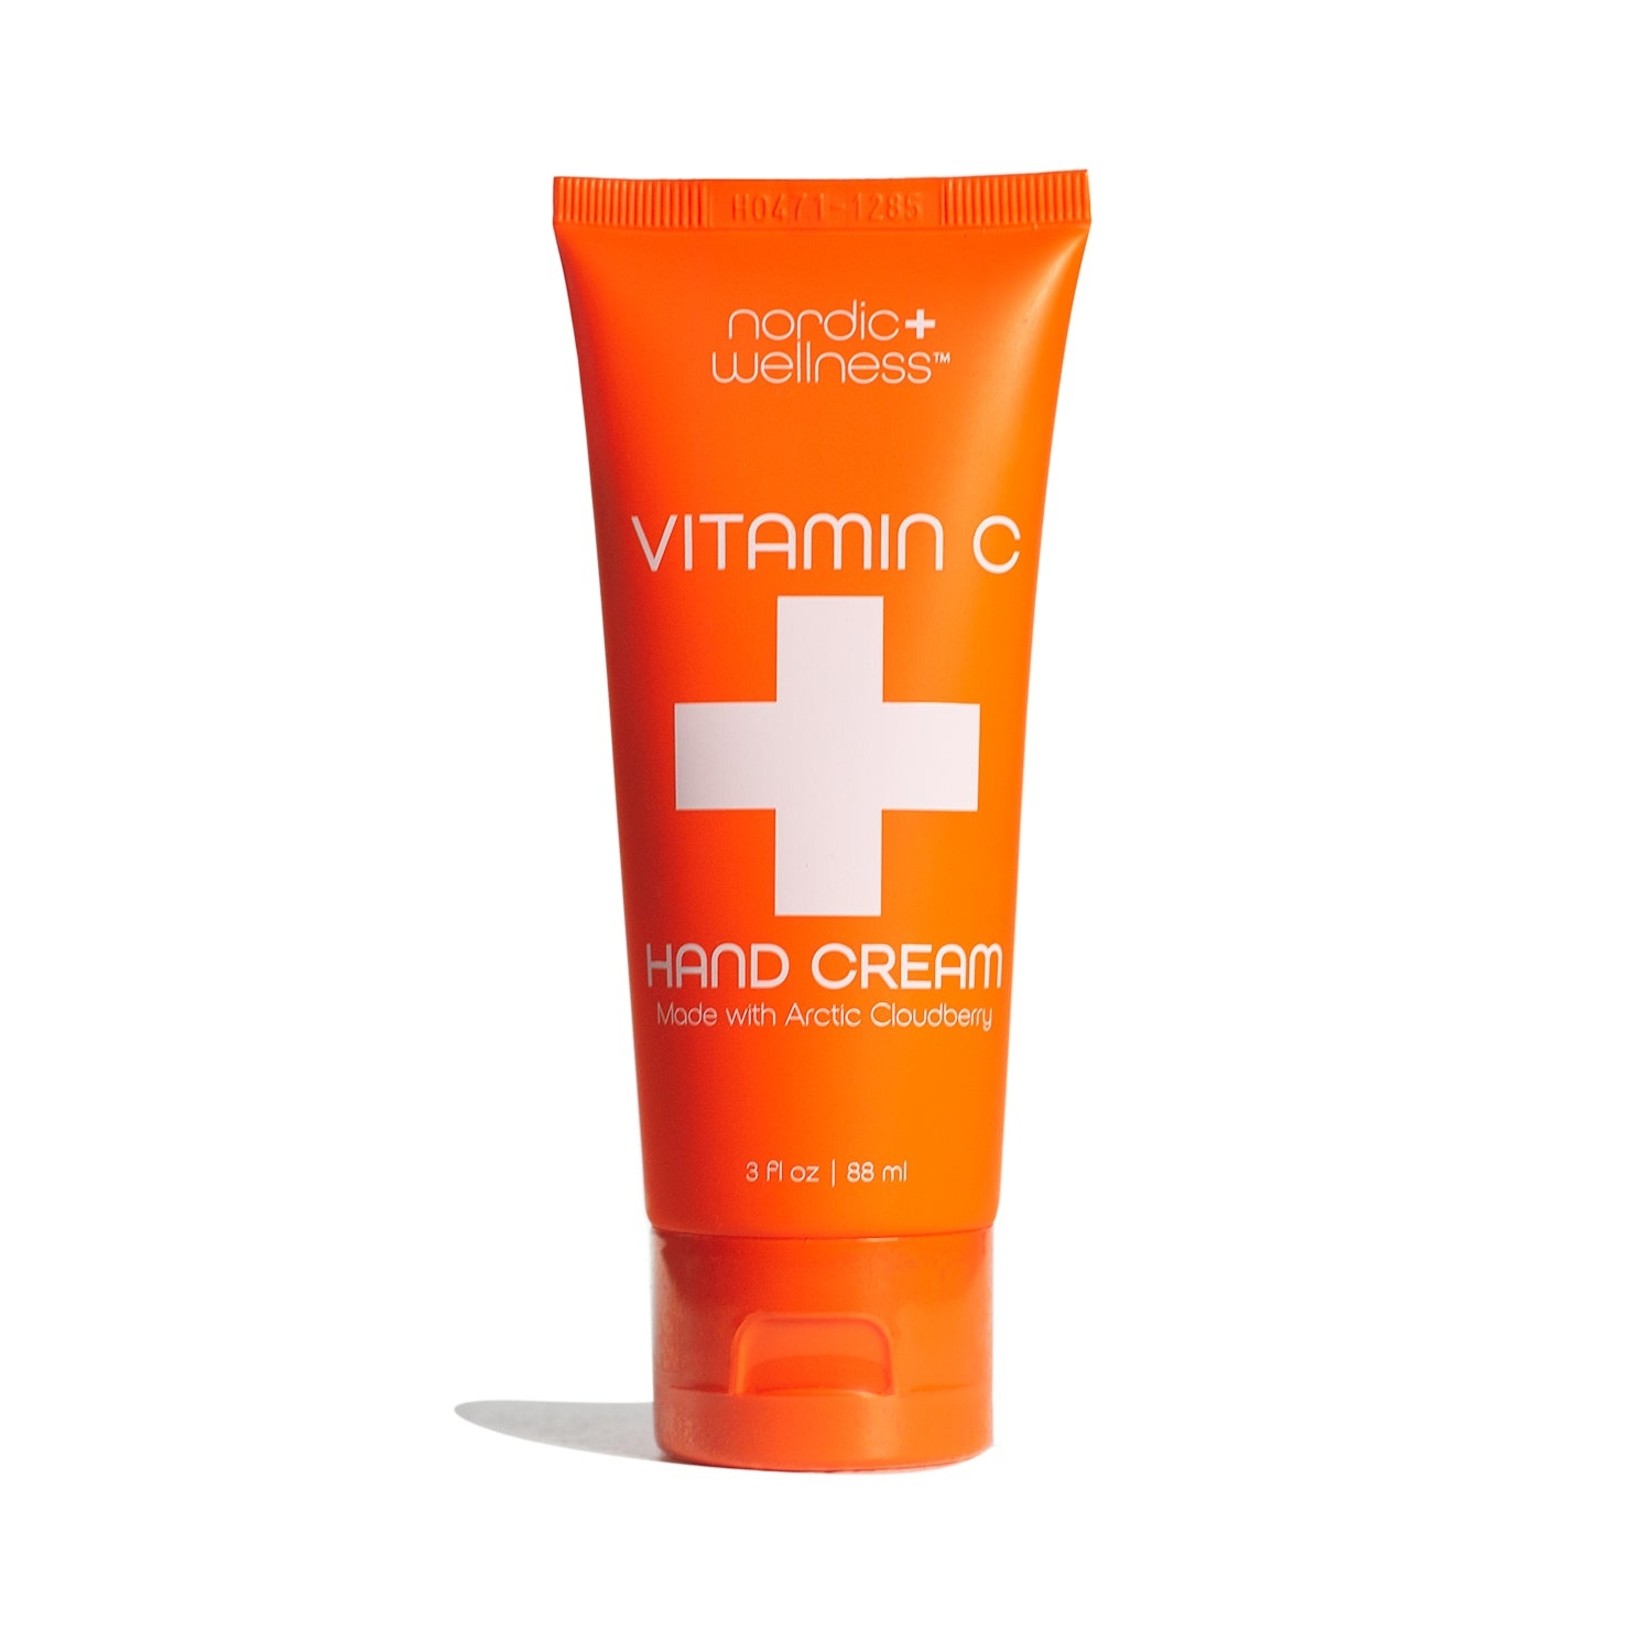 Kala Nordic+ Wellness Vitamin C Hand Cream